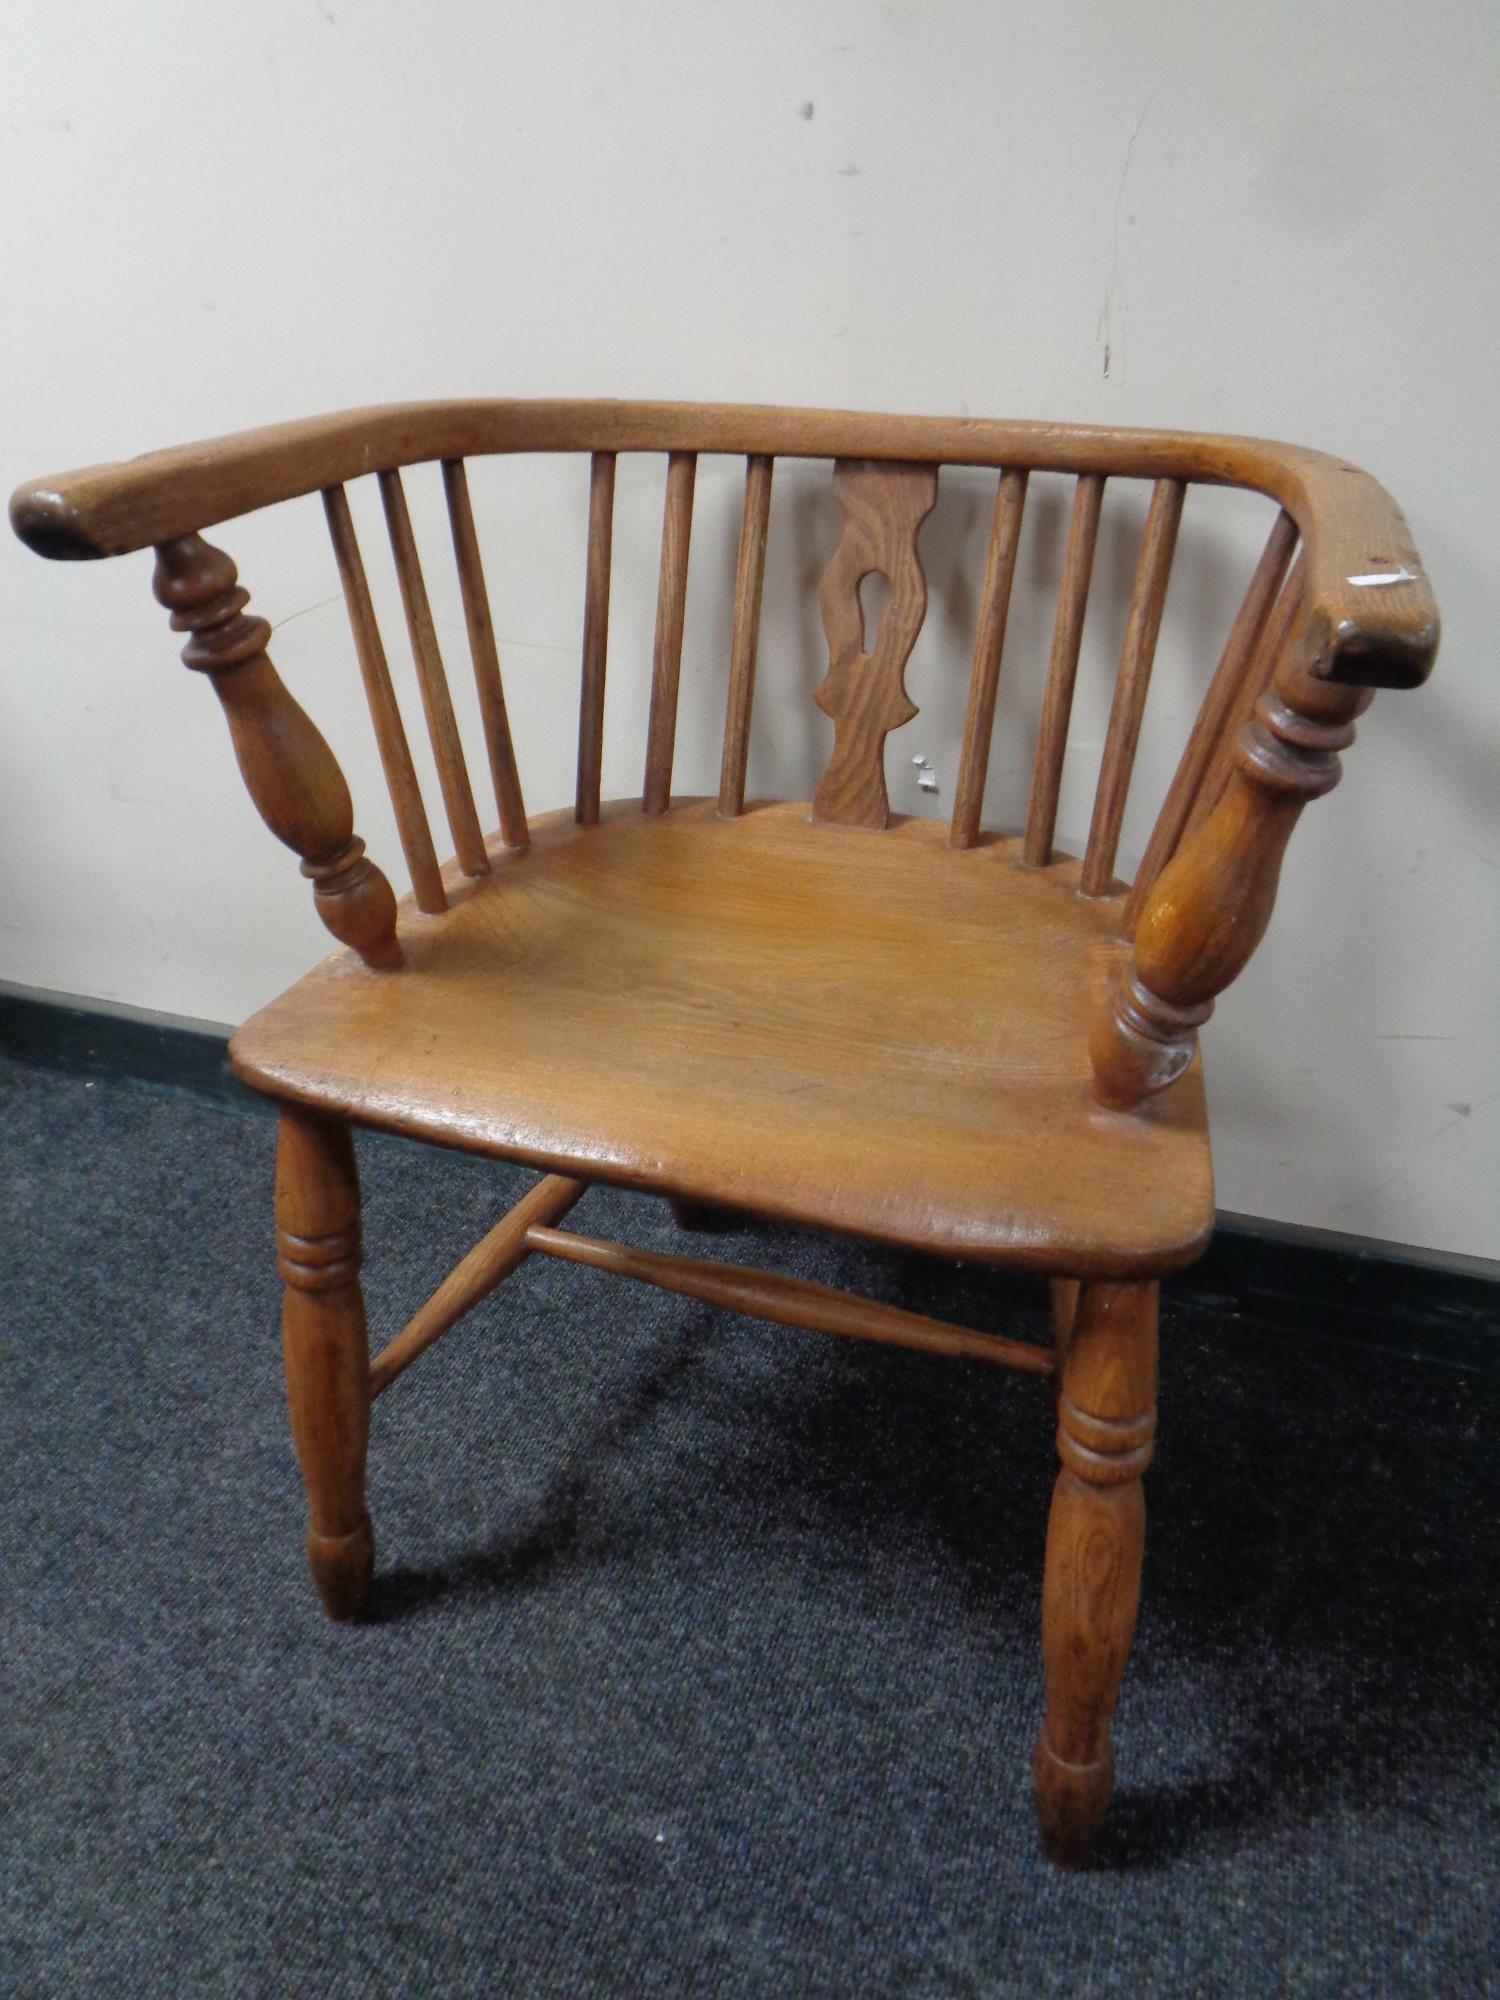 An antique elm kitchen armchair (no back)